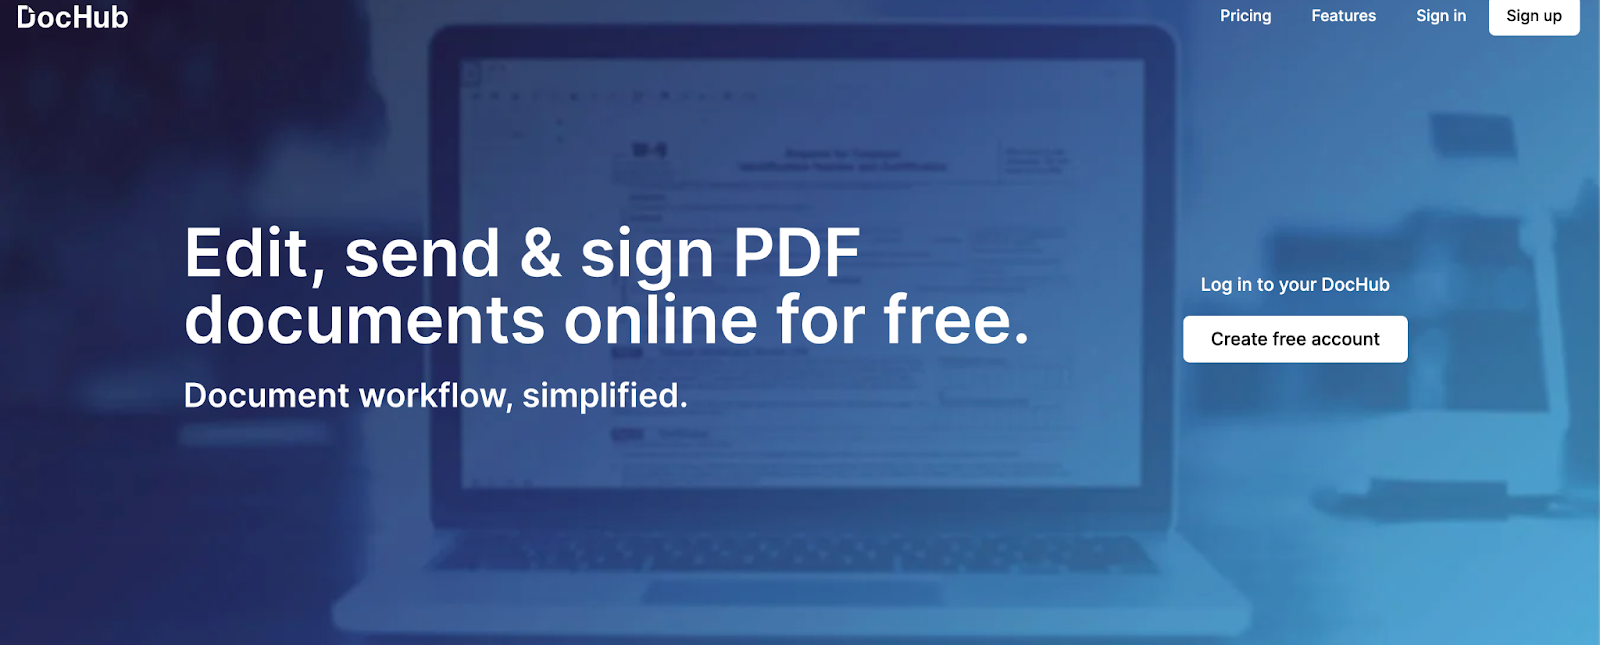 DocHub - Edit, send & sign PDF documents online for free